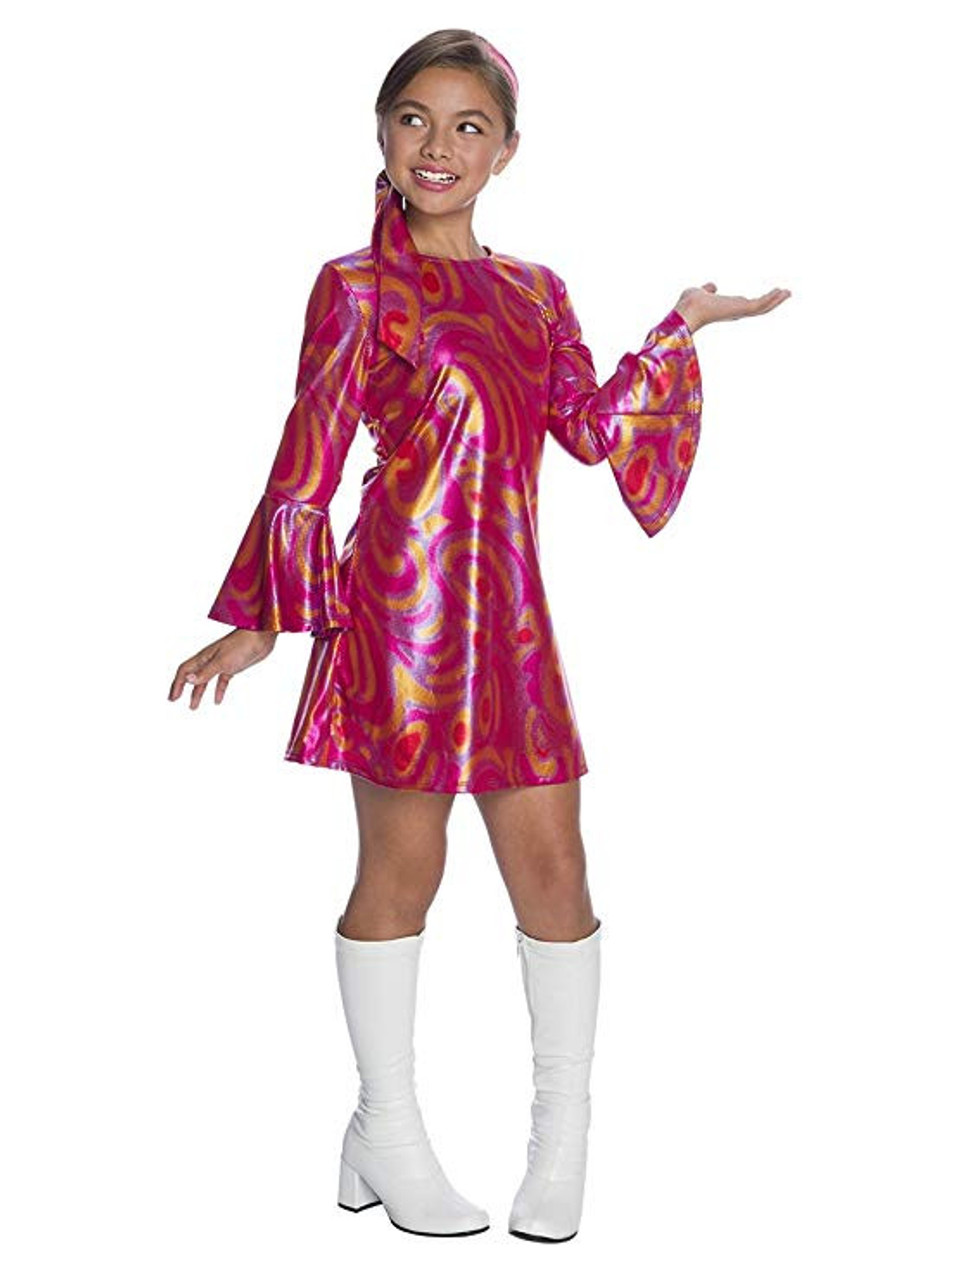 Fuschia Swirl Disco Diva Girls Costume Dress